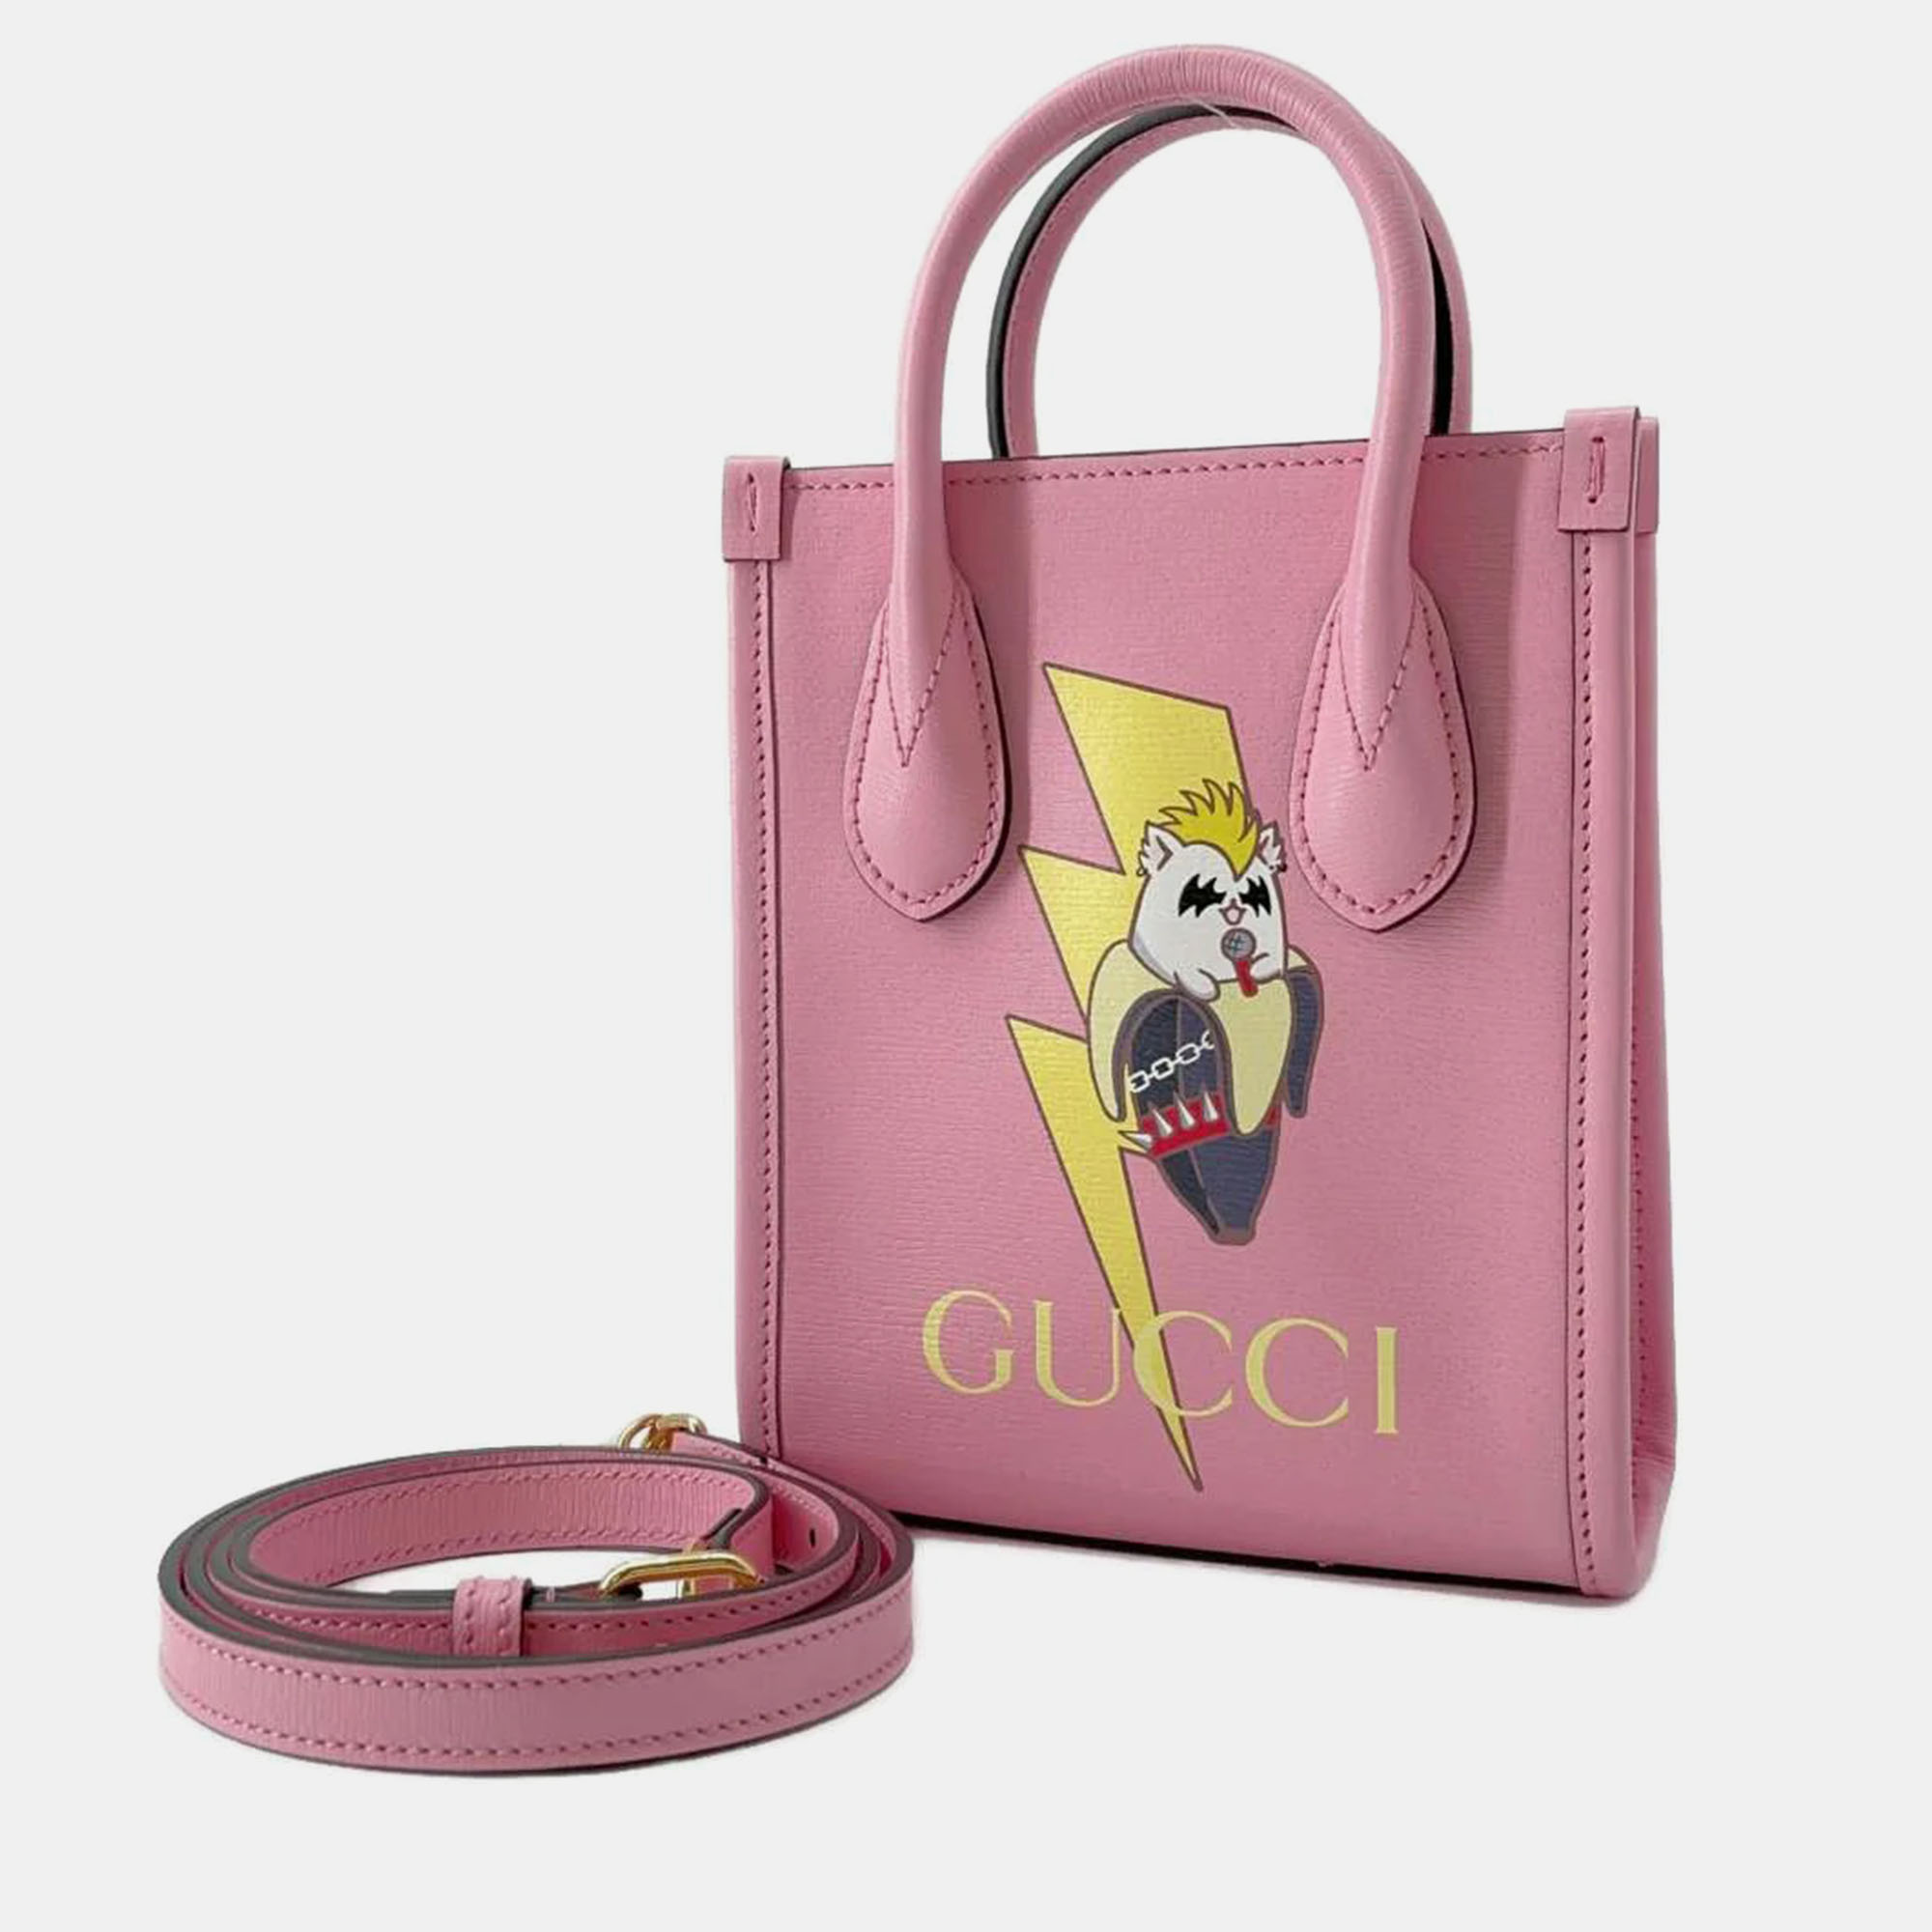 Pre-owned Gucci Pink Leather Bananya Print Tote Bag